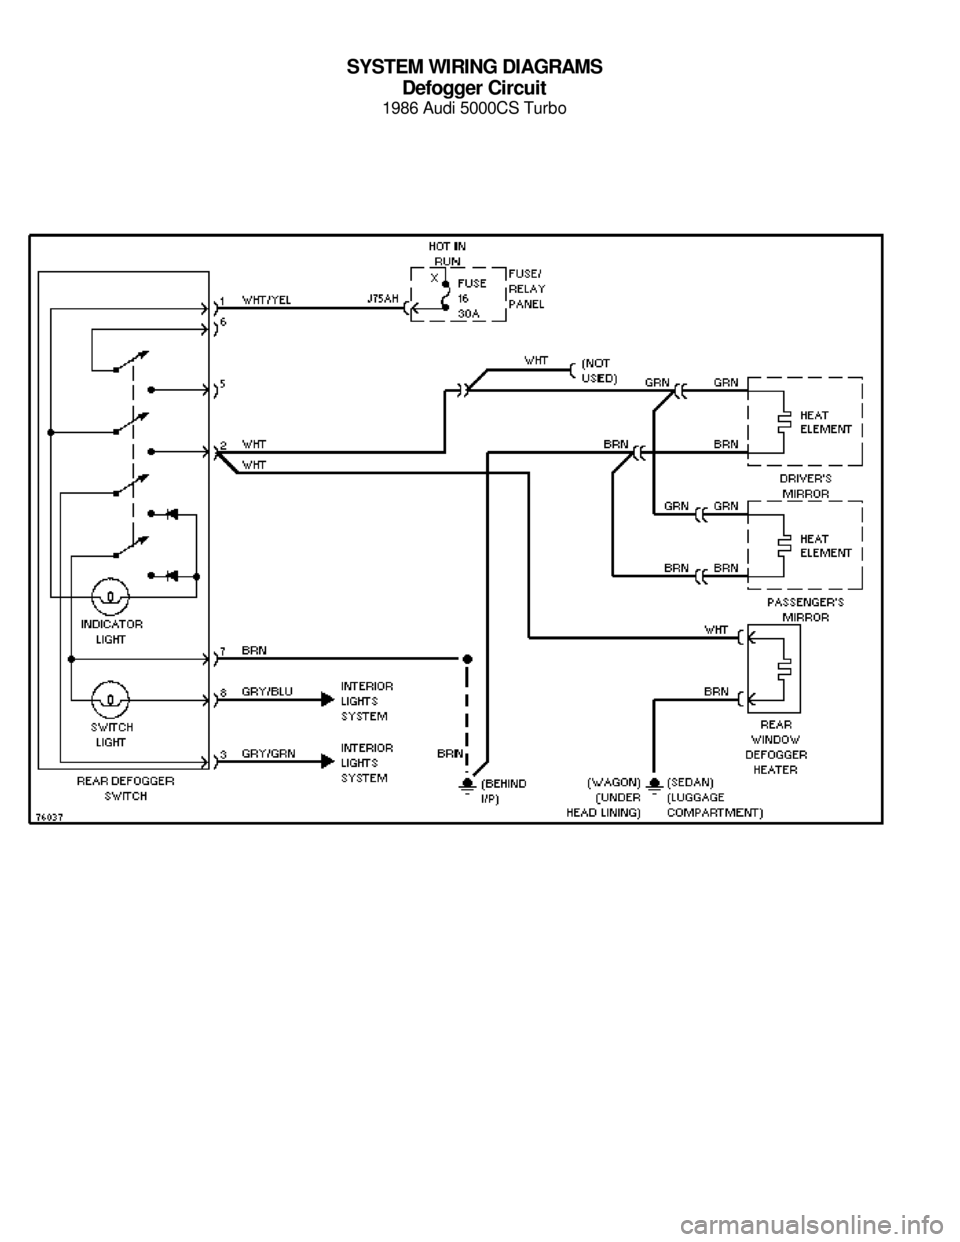 AUDI 5000CS 1986 C2 System Wiring Diagram SYSTEM WIRING DIAGRAMS
Defogger Circuit
1986 Audi 5000CS Turbo
For x    
Copyright © 1998 Mitchell Repair Information Company, LLCMonday, July 19, 2004  05:51PM 